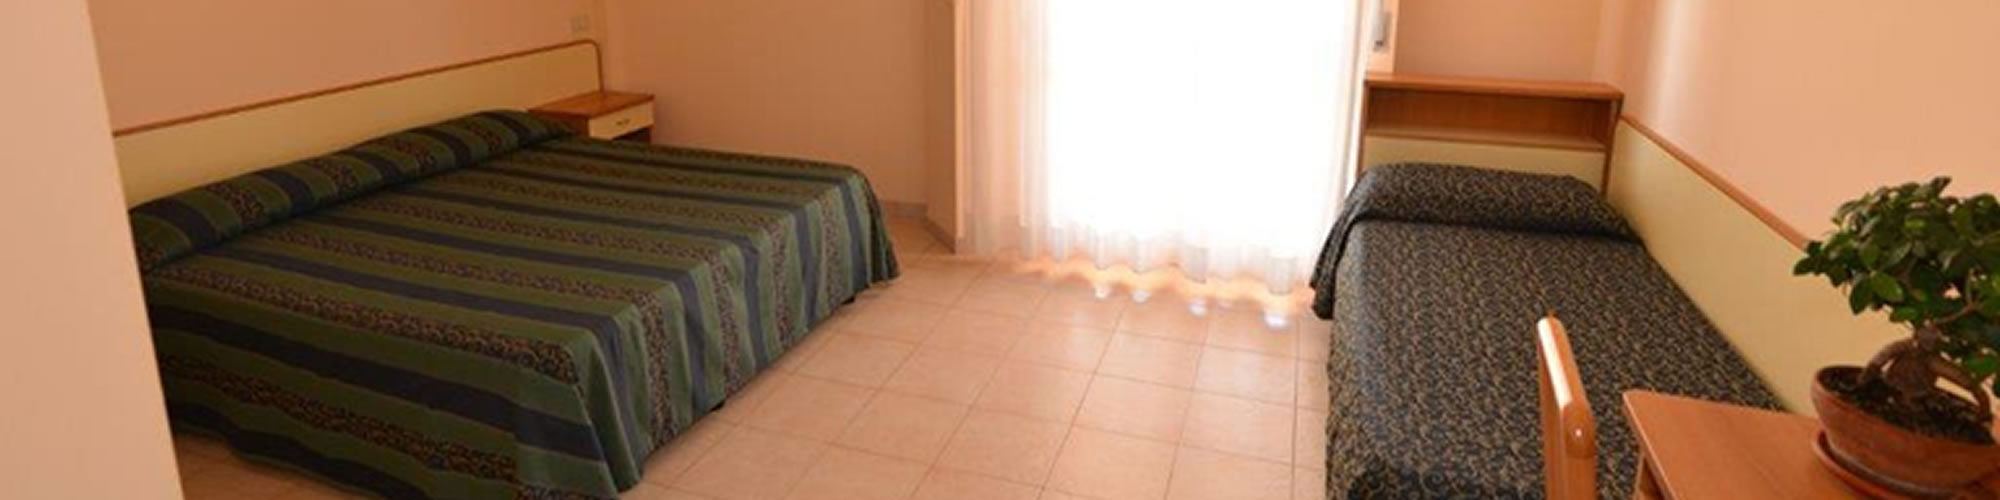 Camera Matrimoniale con lettino Hotel Caraibi Senigallia